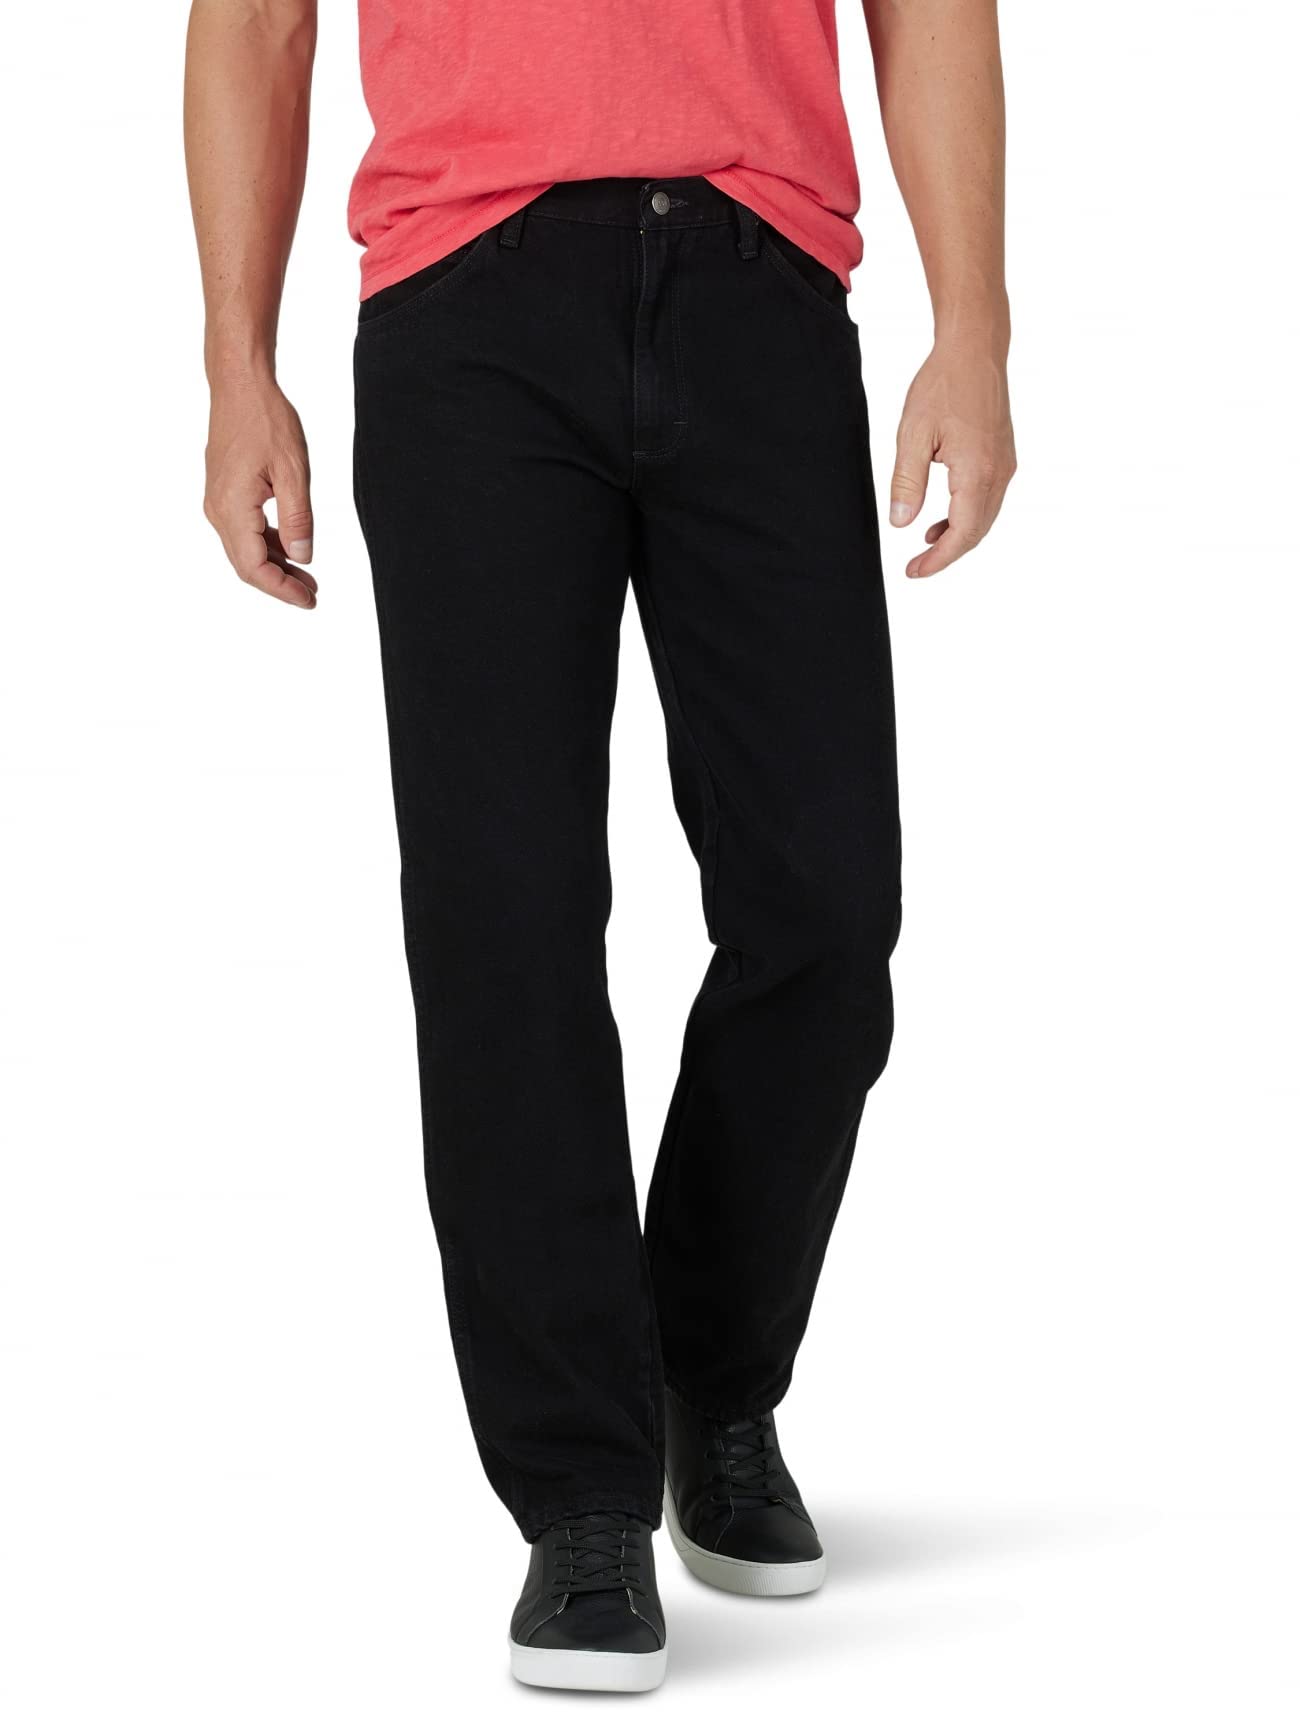 Wrangler Authentics Men's Classic 5-Pocket Regular Fit Cotton Jean, Black, 32W x 34L